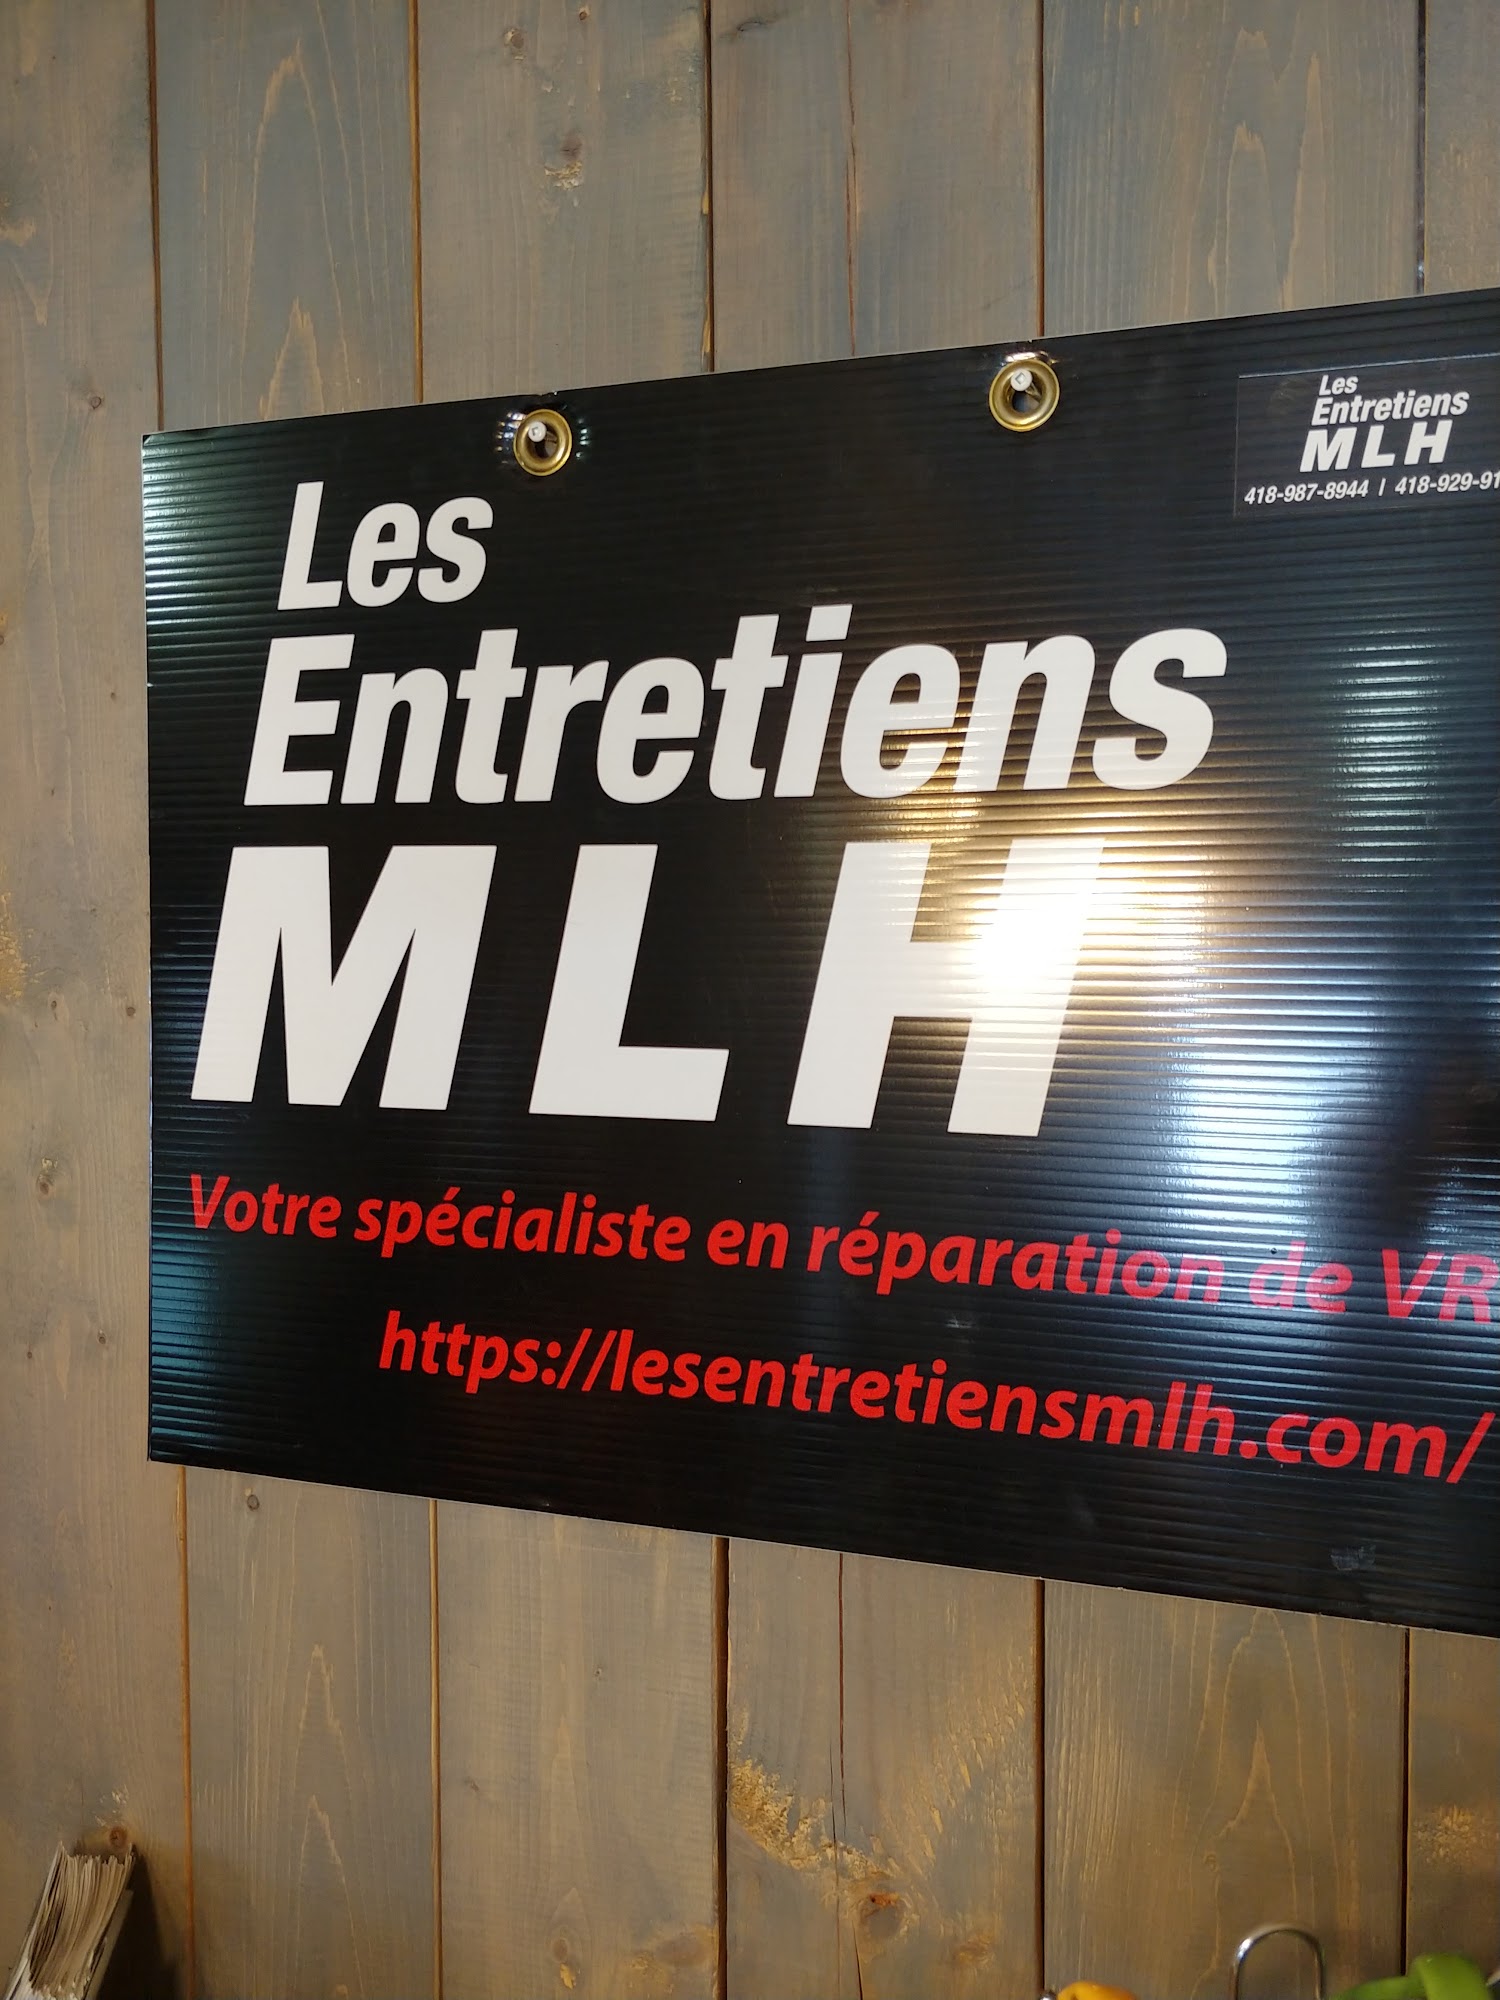 SOS Camping/ Les Entretiens MLH inc 709 Côte Joyeuse, Saint-Raymond Quebec G3L 4B2